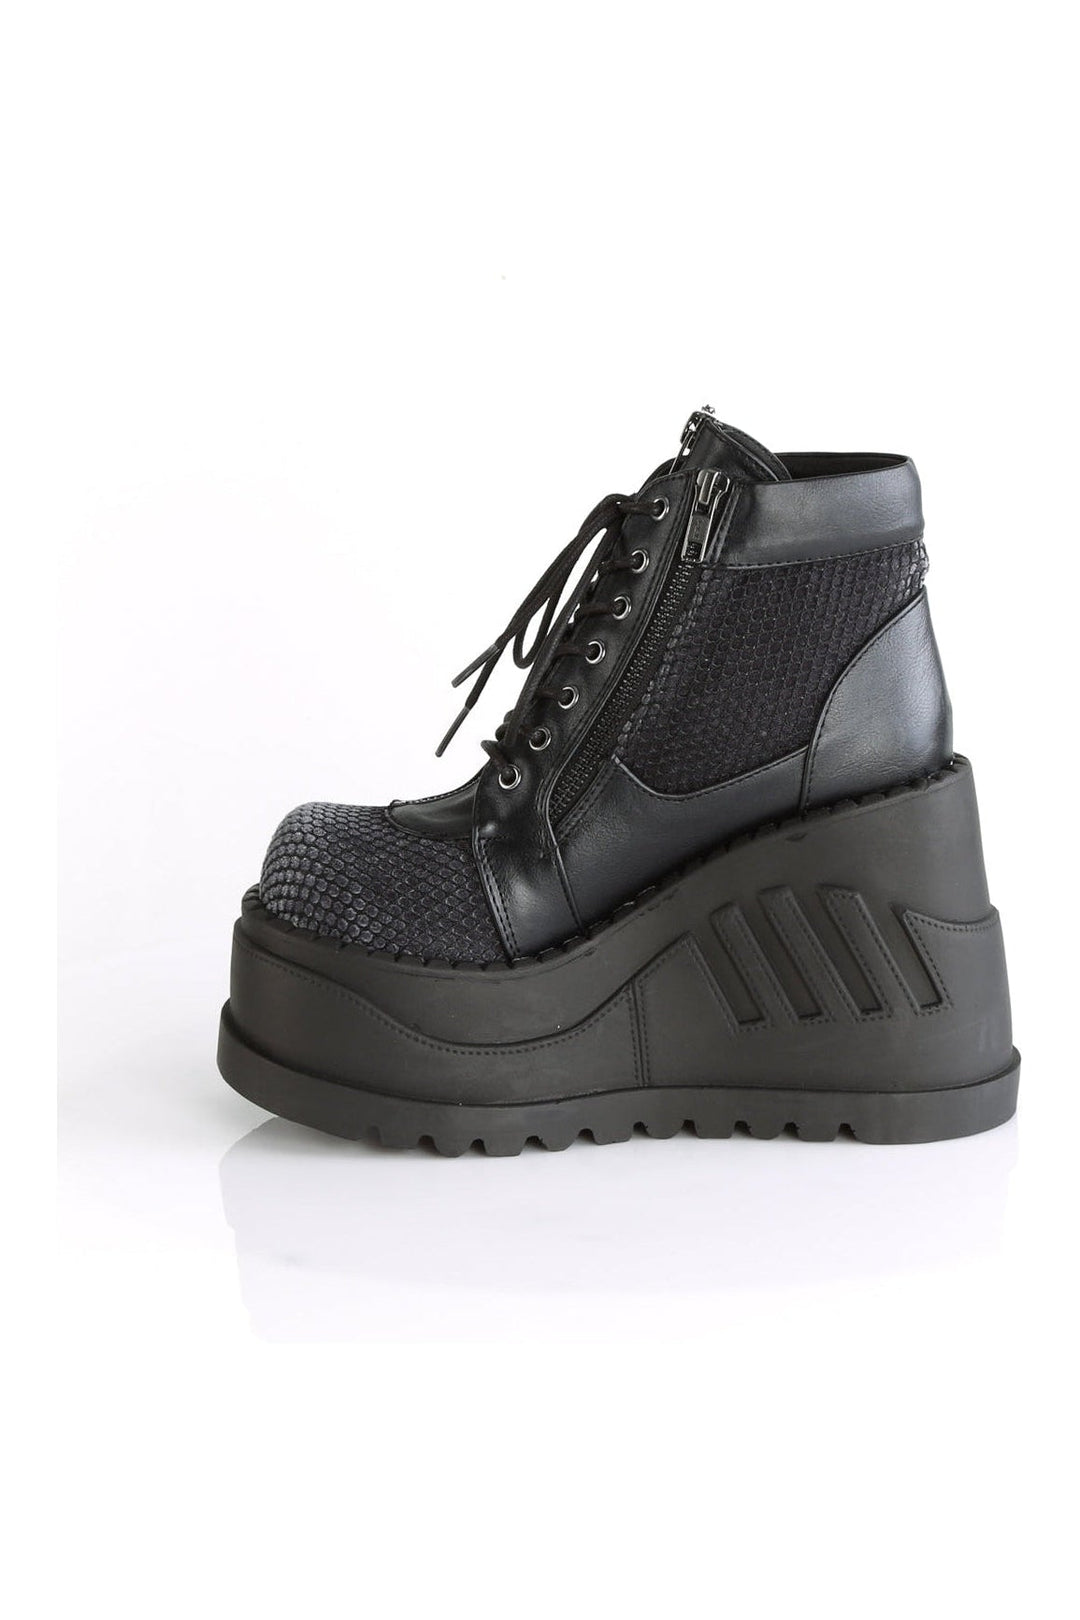 STOMP-18 Black Vegan Leather Cyber Shoe